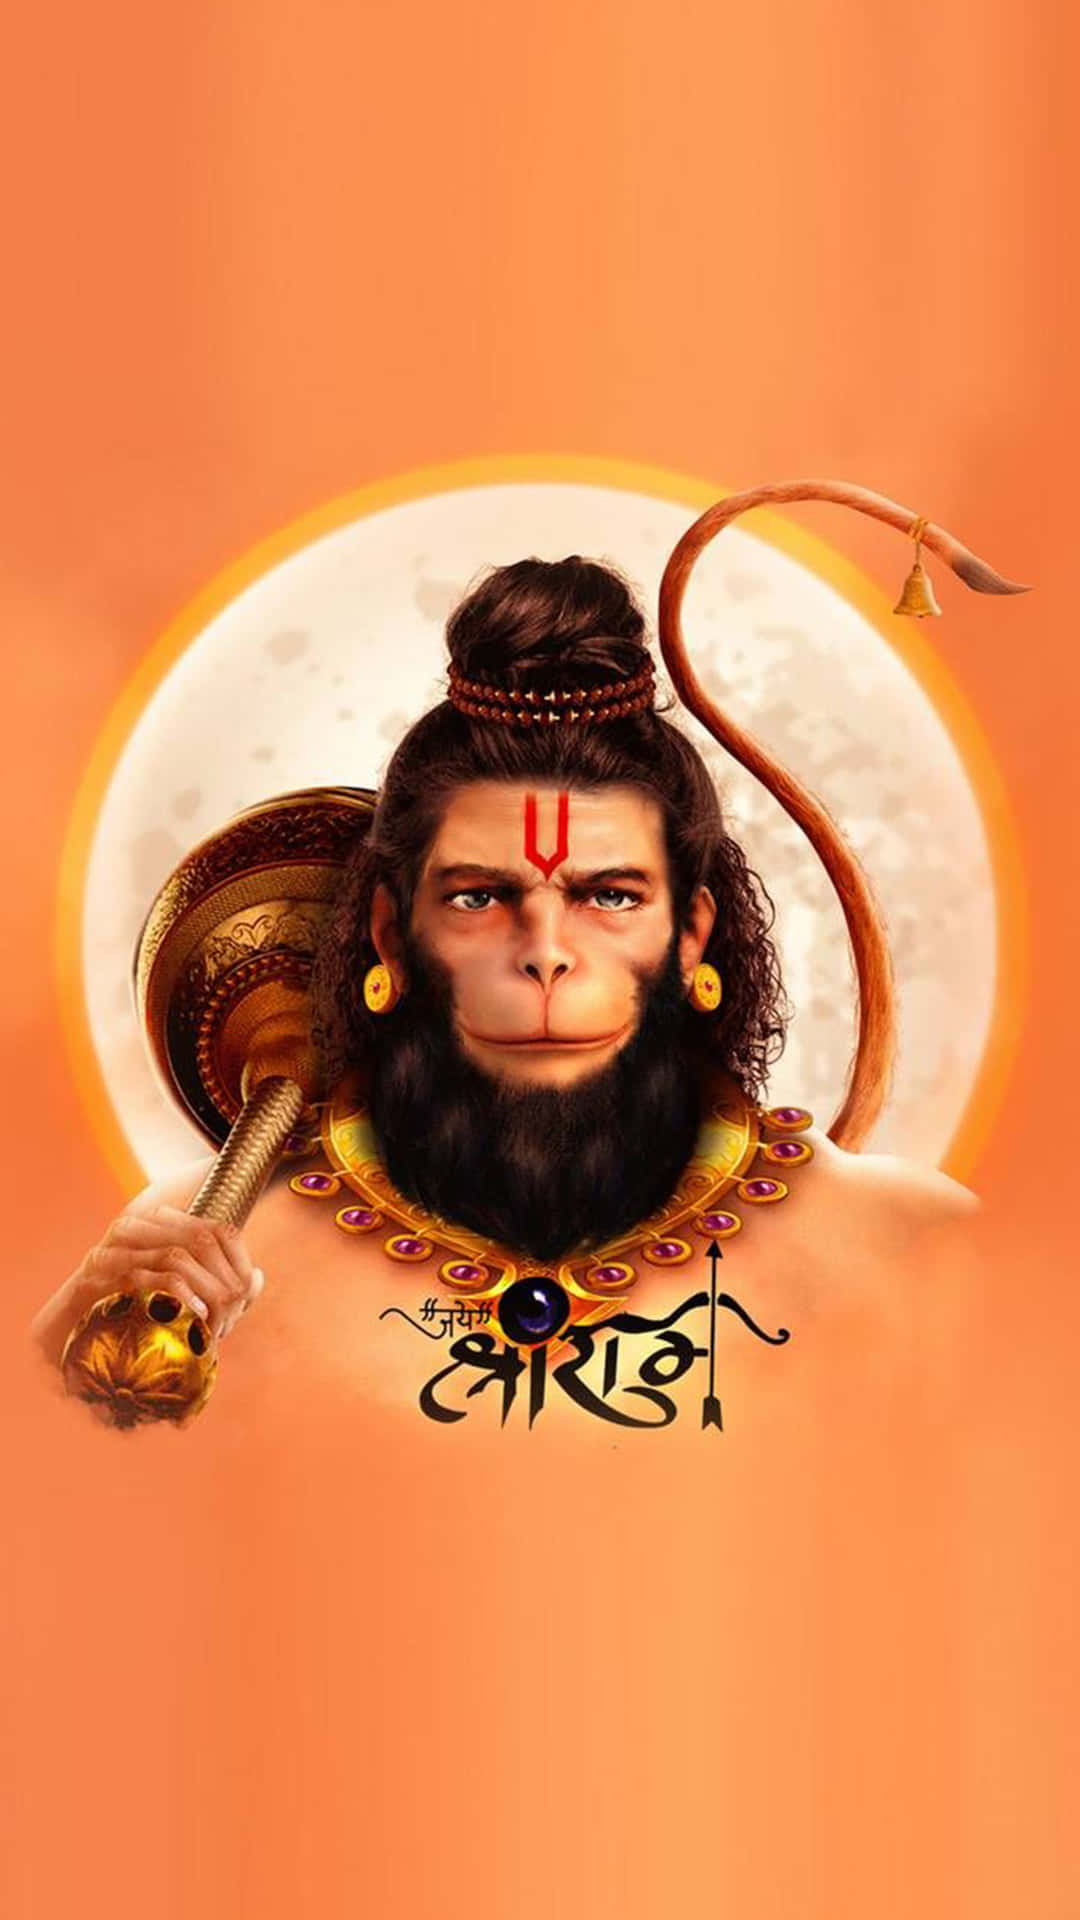 Majestic Artistic Representation of Lord Hanuman